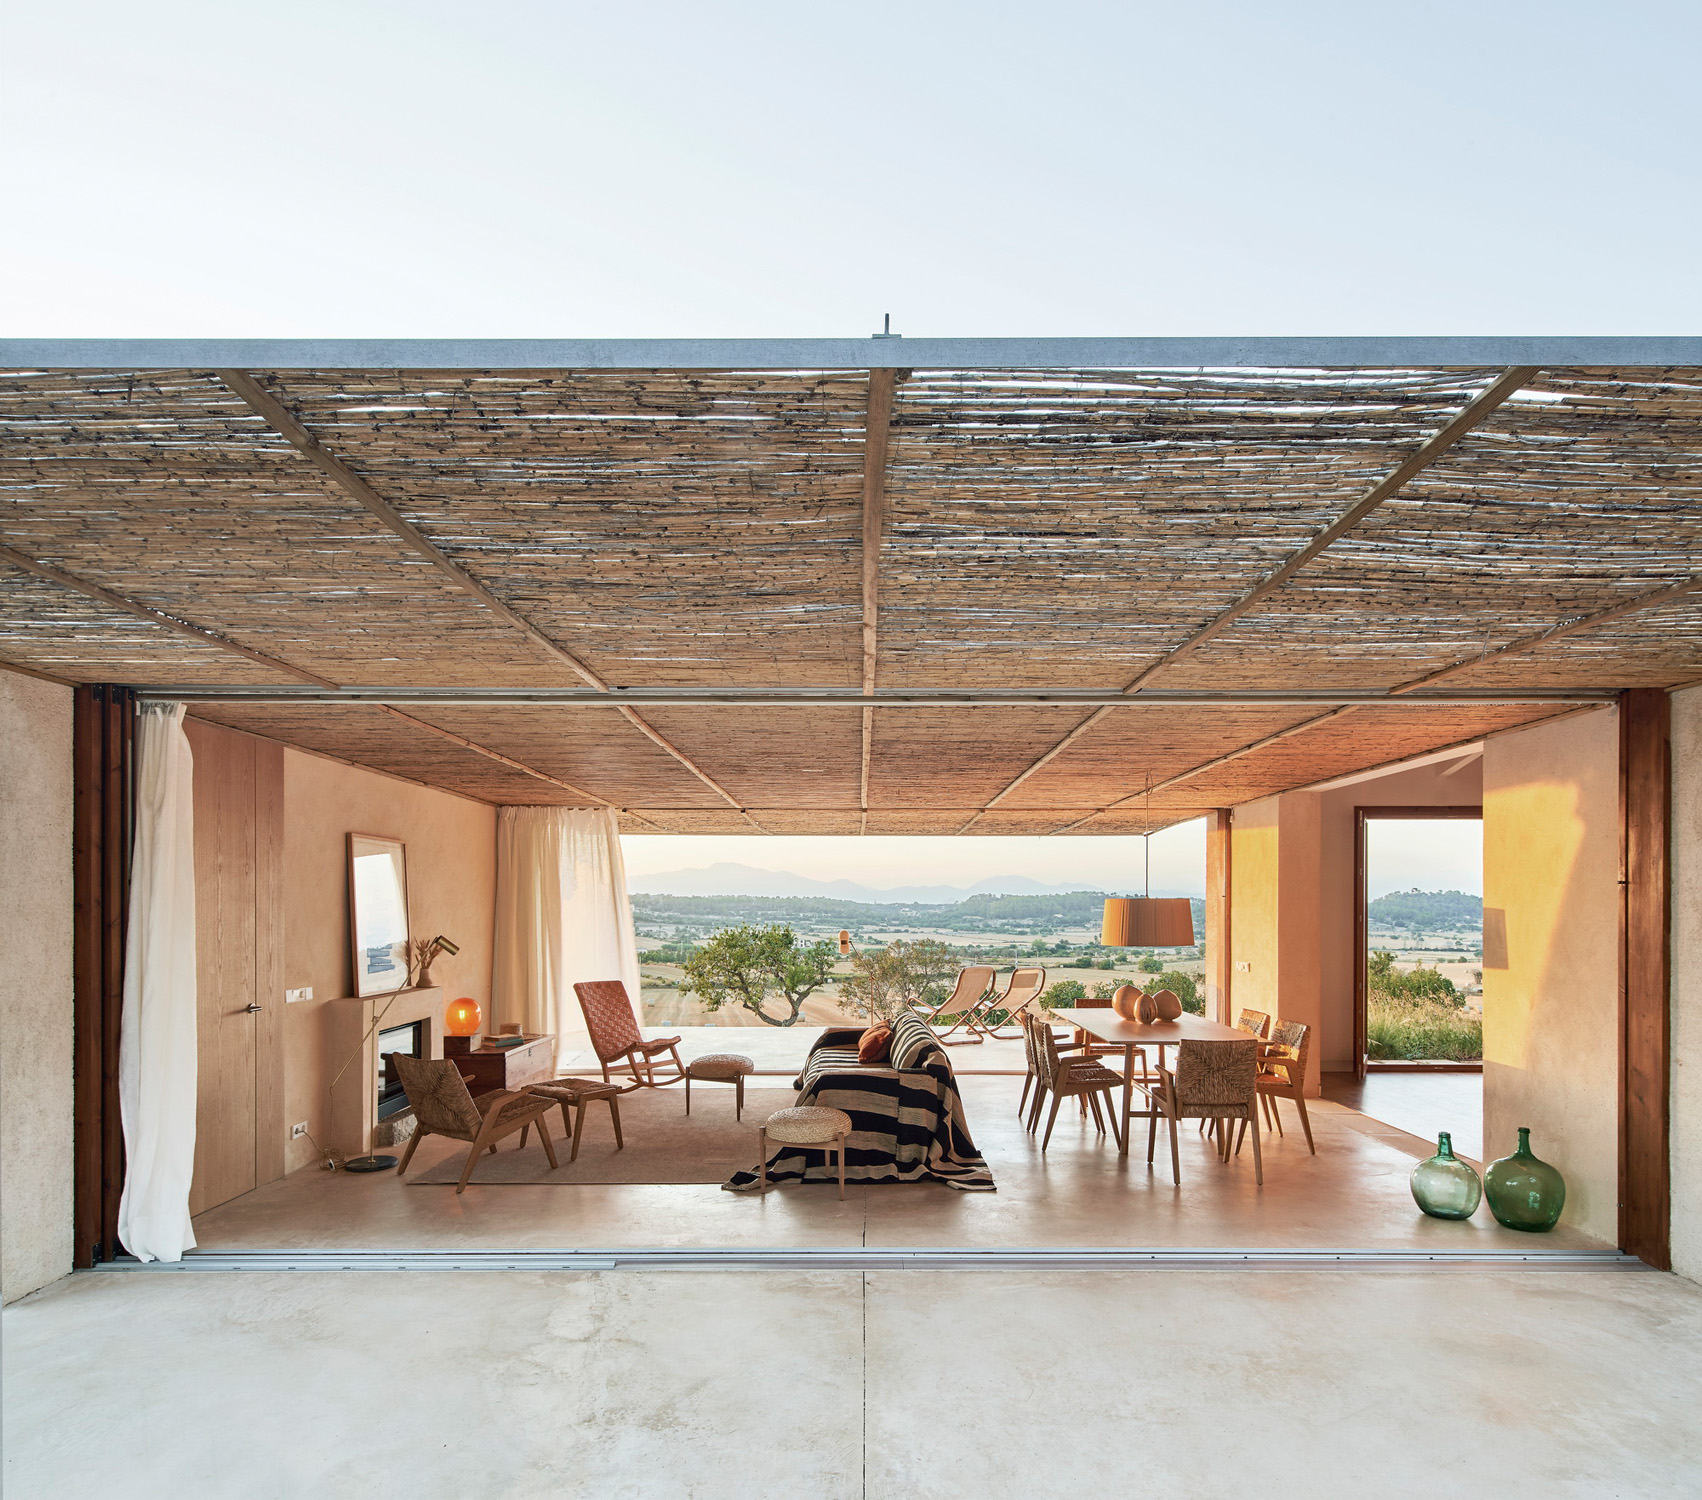 Canopy by OHLAB - luxury contemporary architecture and interior design studio in Ibiza